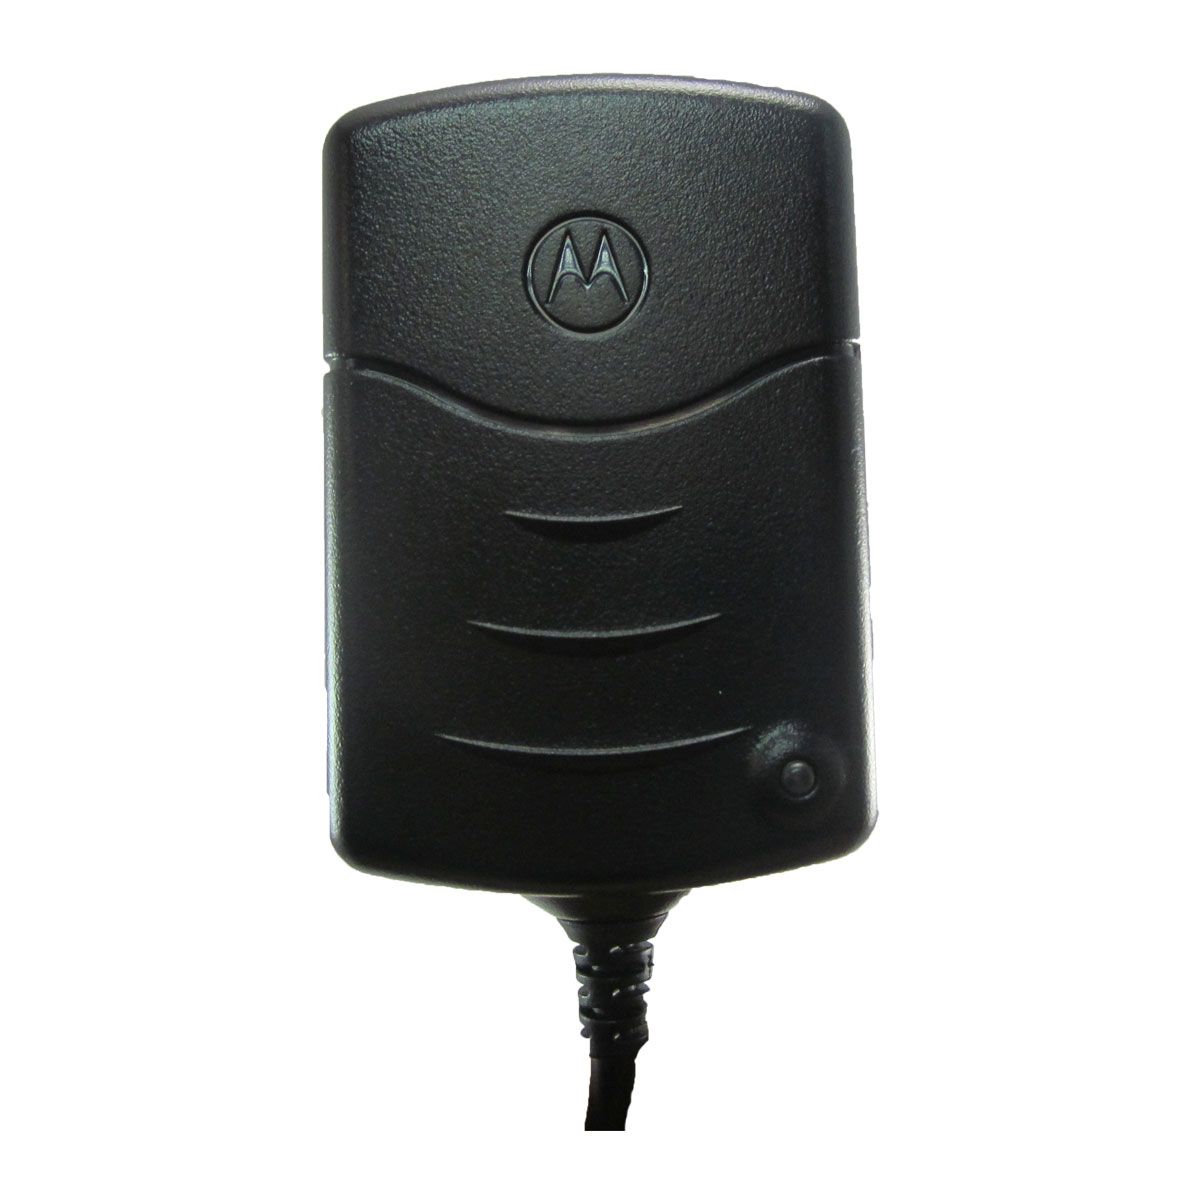 Cargador individual Motorola NNTN7558A para radio MTP850